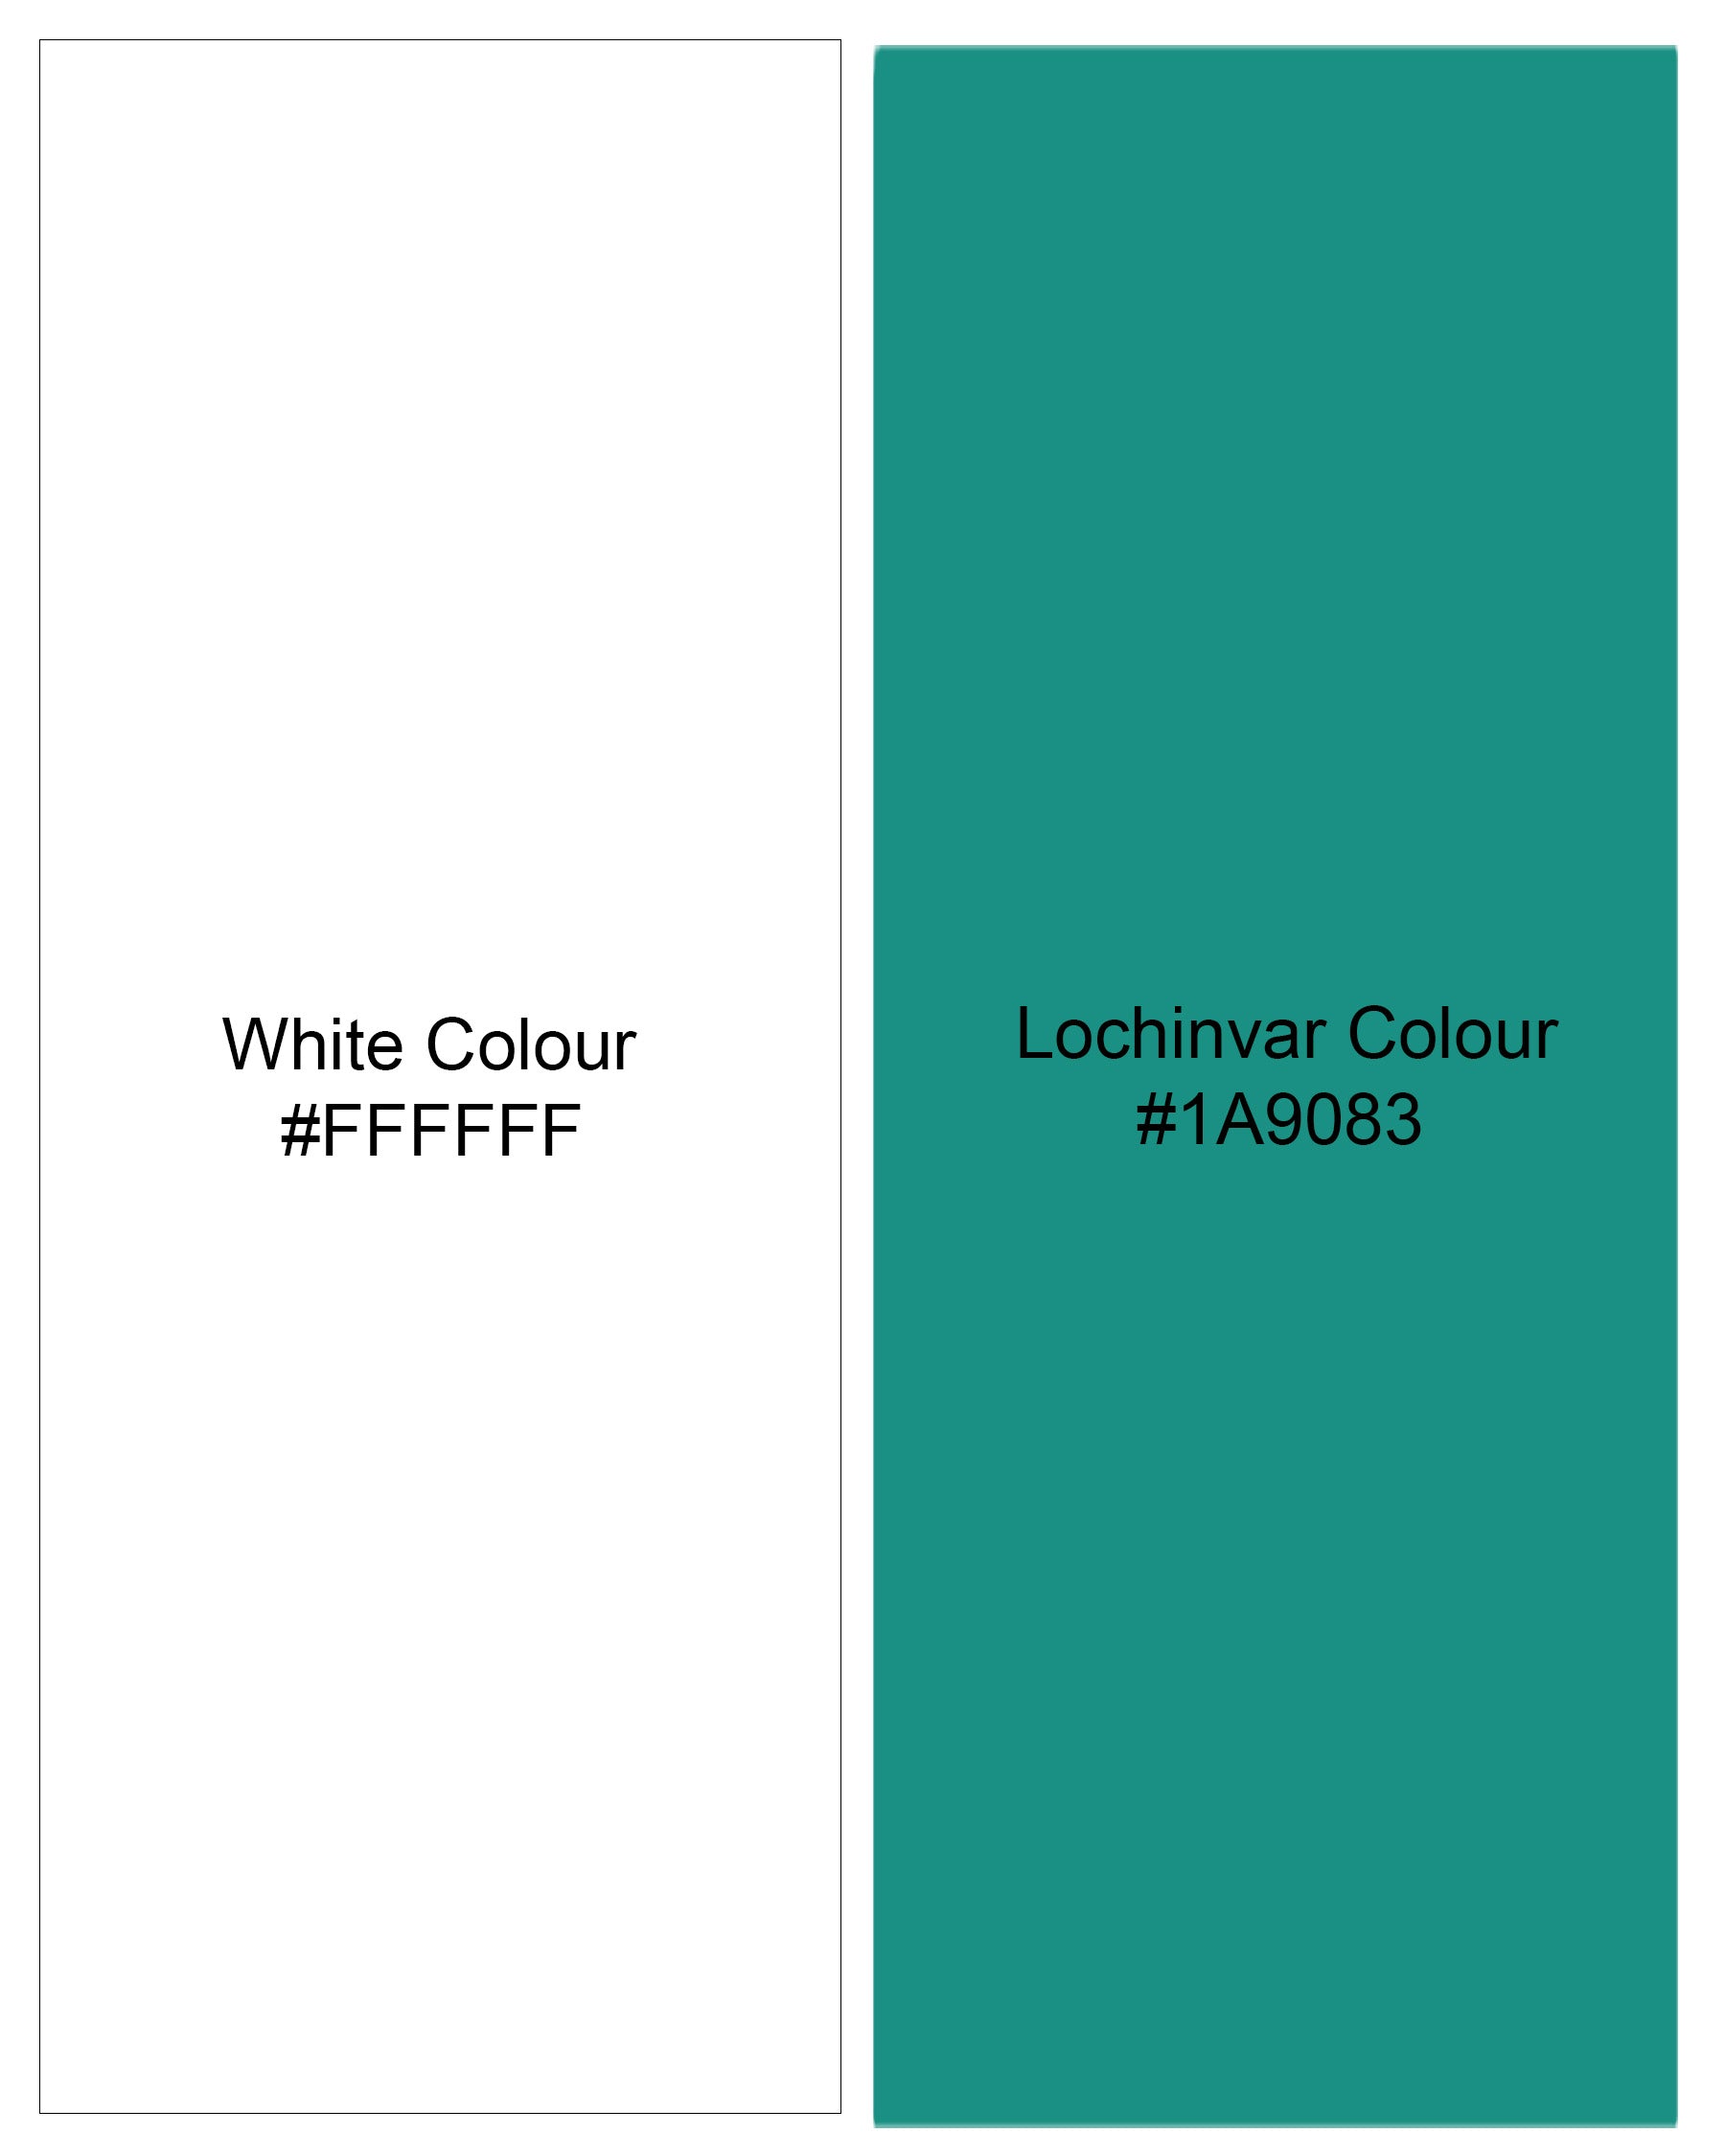 Lochinvar Aqua Green with White Gingham Dobby Textured Premium Giza Cotton Shirt 8245-CA-38,8245-CA-H-38,8245-CA-39,8245-CA-H-39,8245-CA-40,8245-CA-H-40,8245-CA-42,8245-CA-H-42,8245-CA-44,8245-CA-H-44,8245-CA-46,8245-CA-H-46,8245-CA-48,8245-CA-H-48,8245-CA-50,8245-CA-H-50,8245-CA-52,8245-CA-H-52